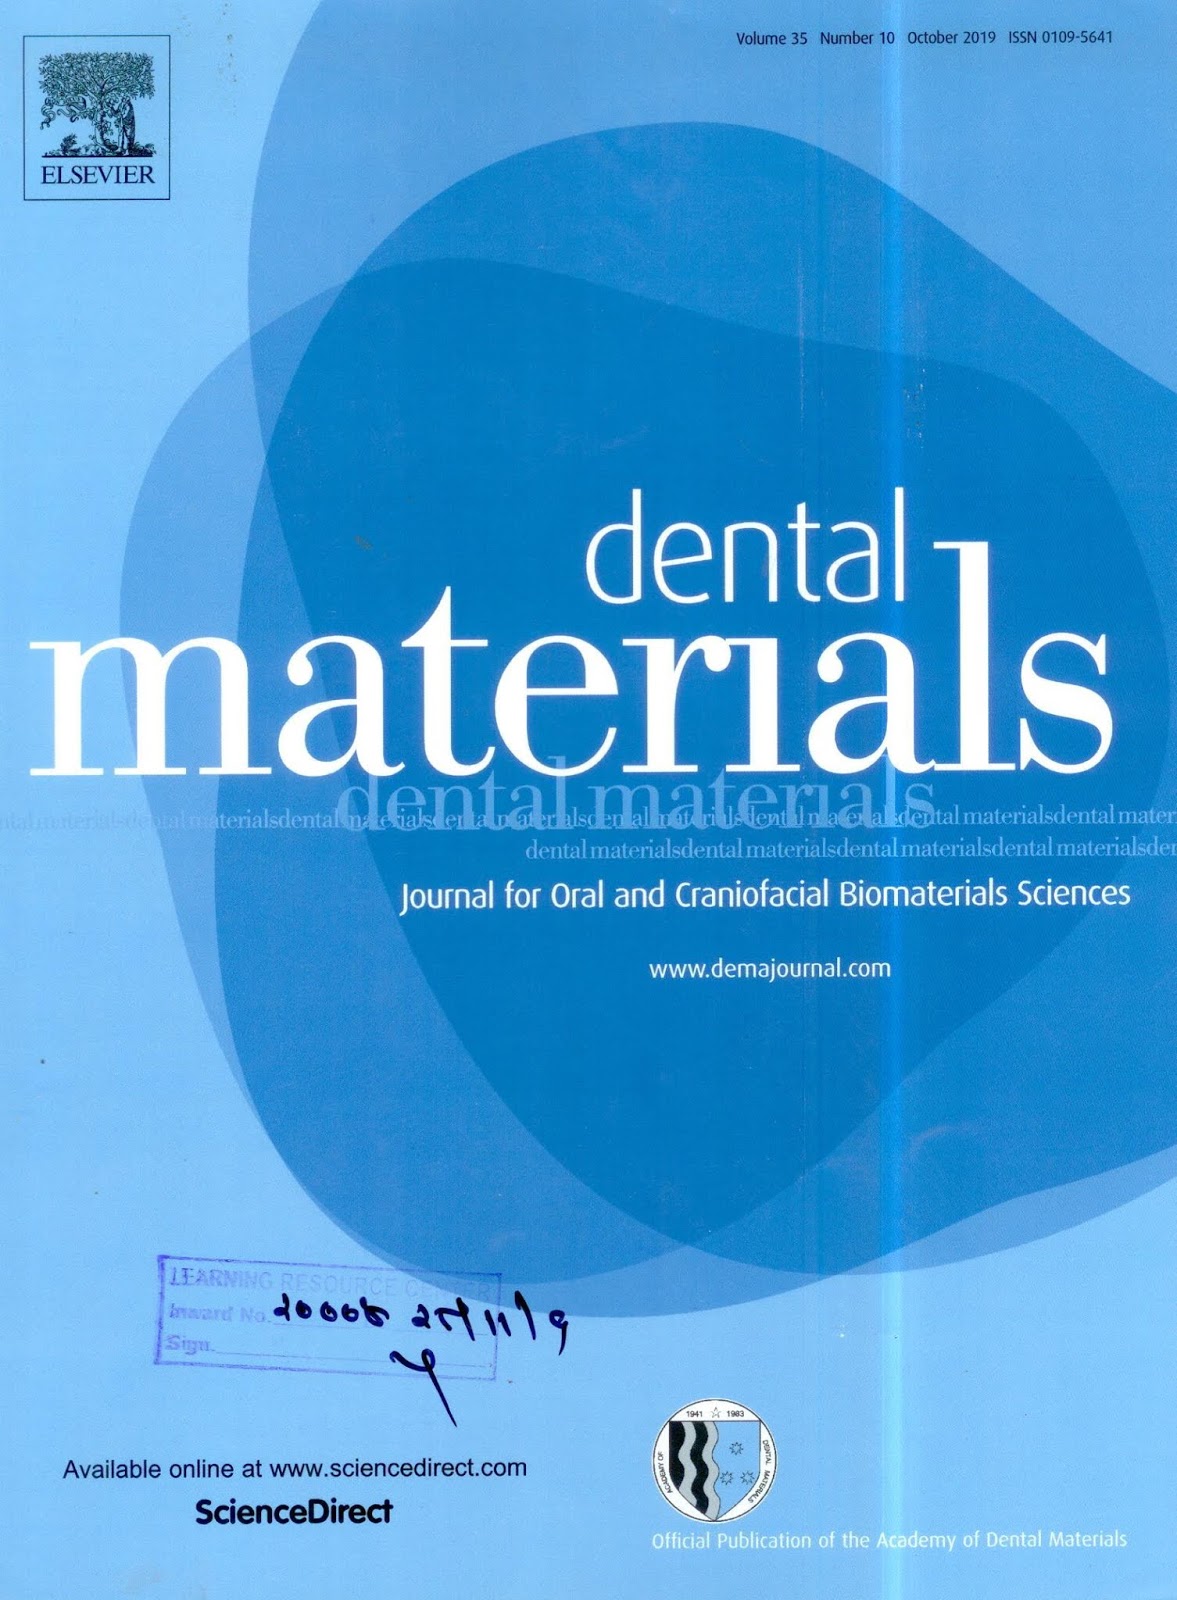 https://www.sciencedirect.com/journal/dental-materials/vol/35/issue/10